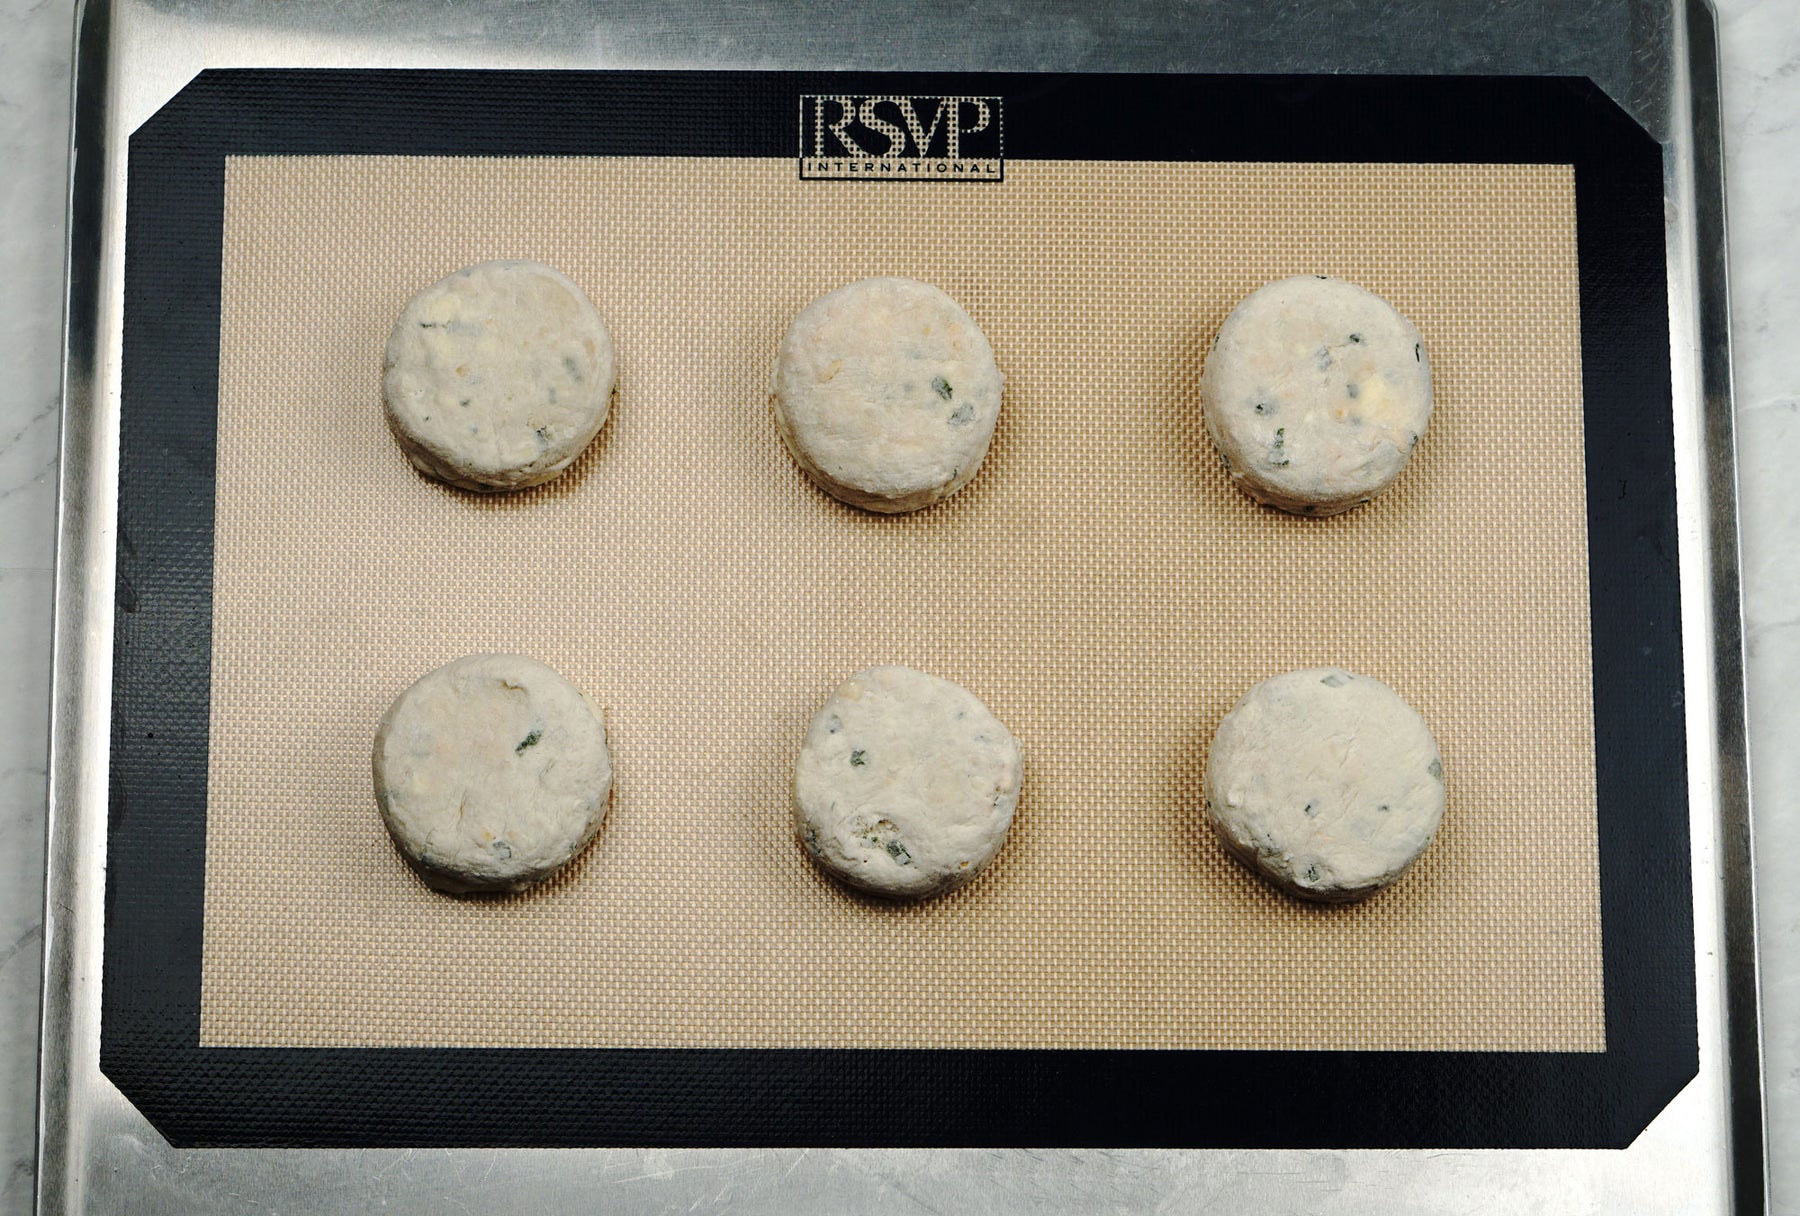 RSVP International Non-Stick Silicone Baking Mat